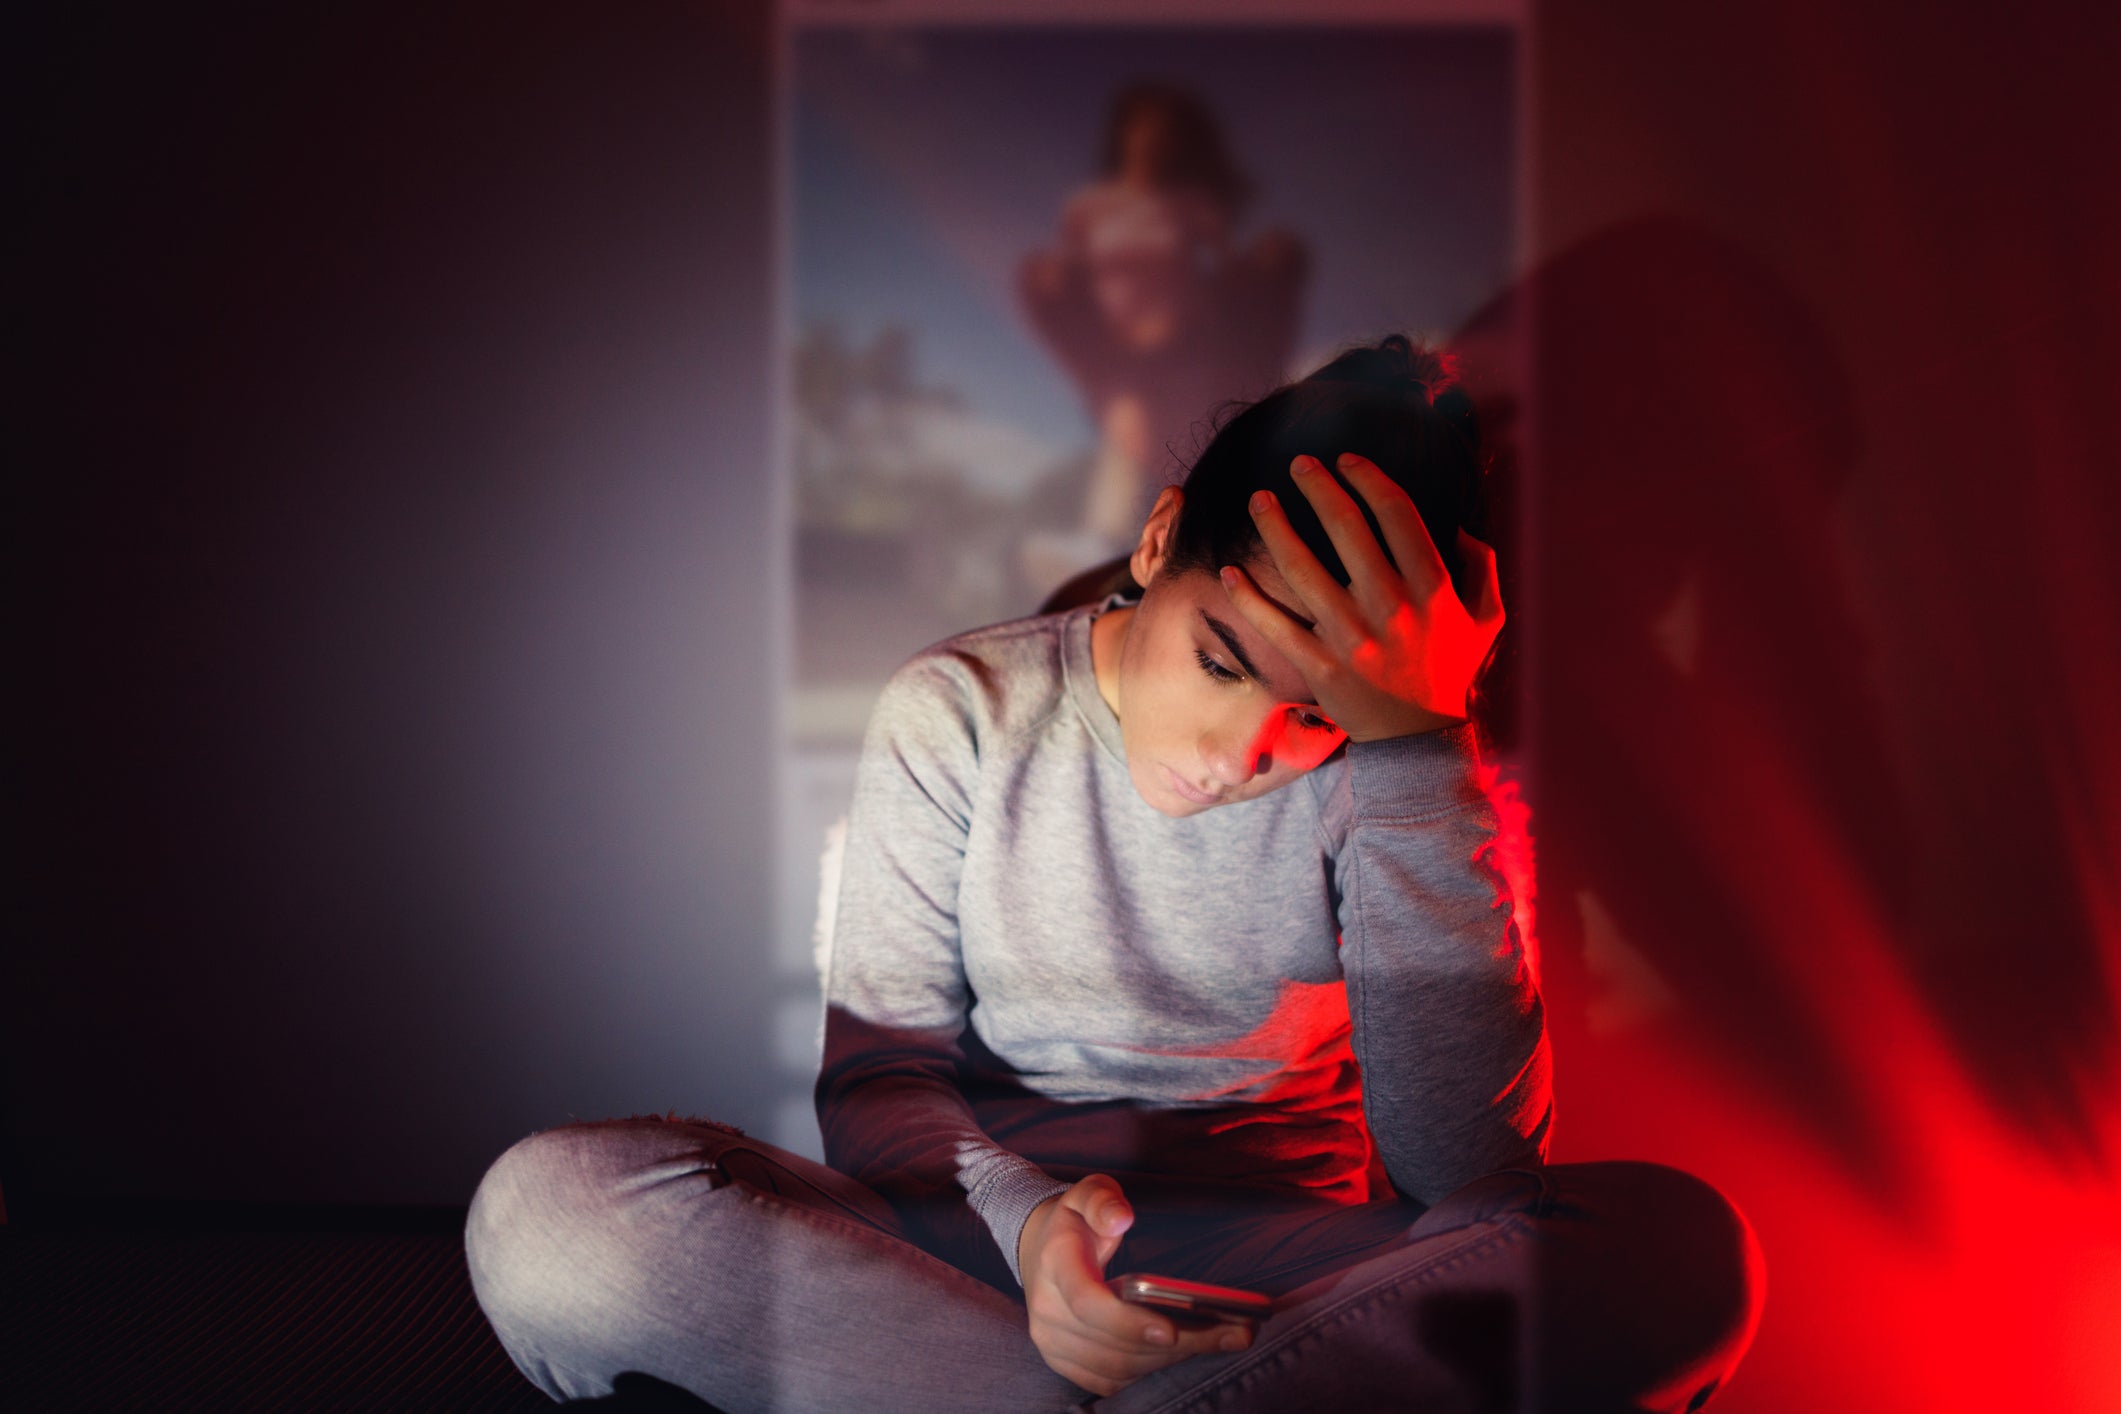 Symptoms of social media addiction include depression